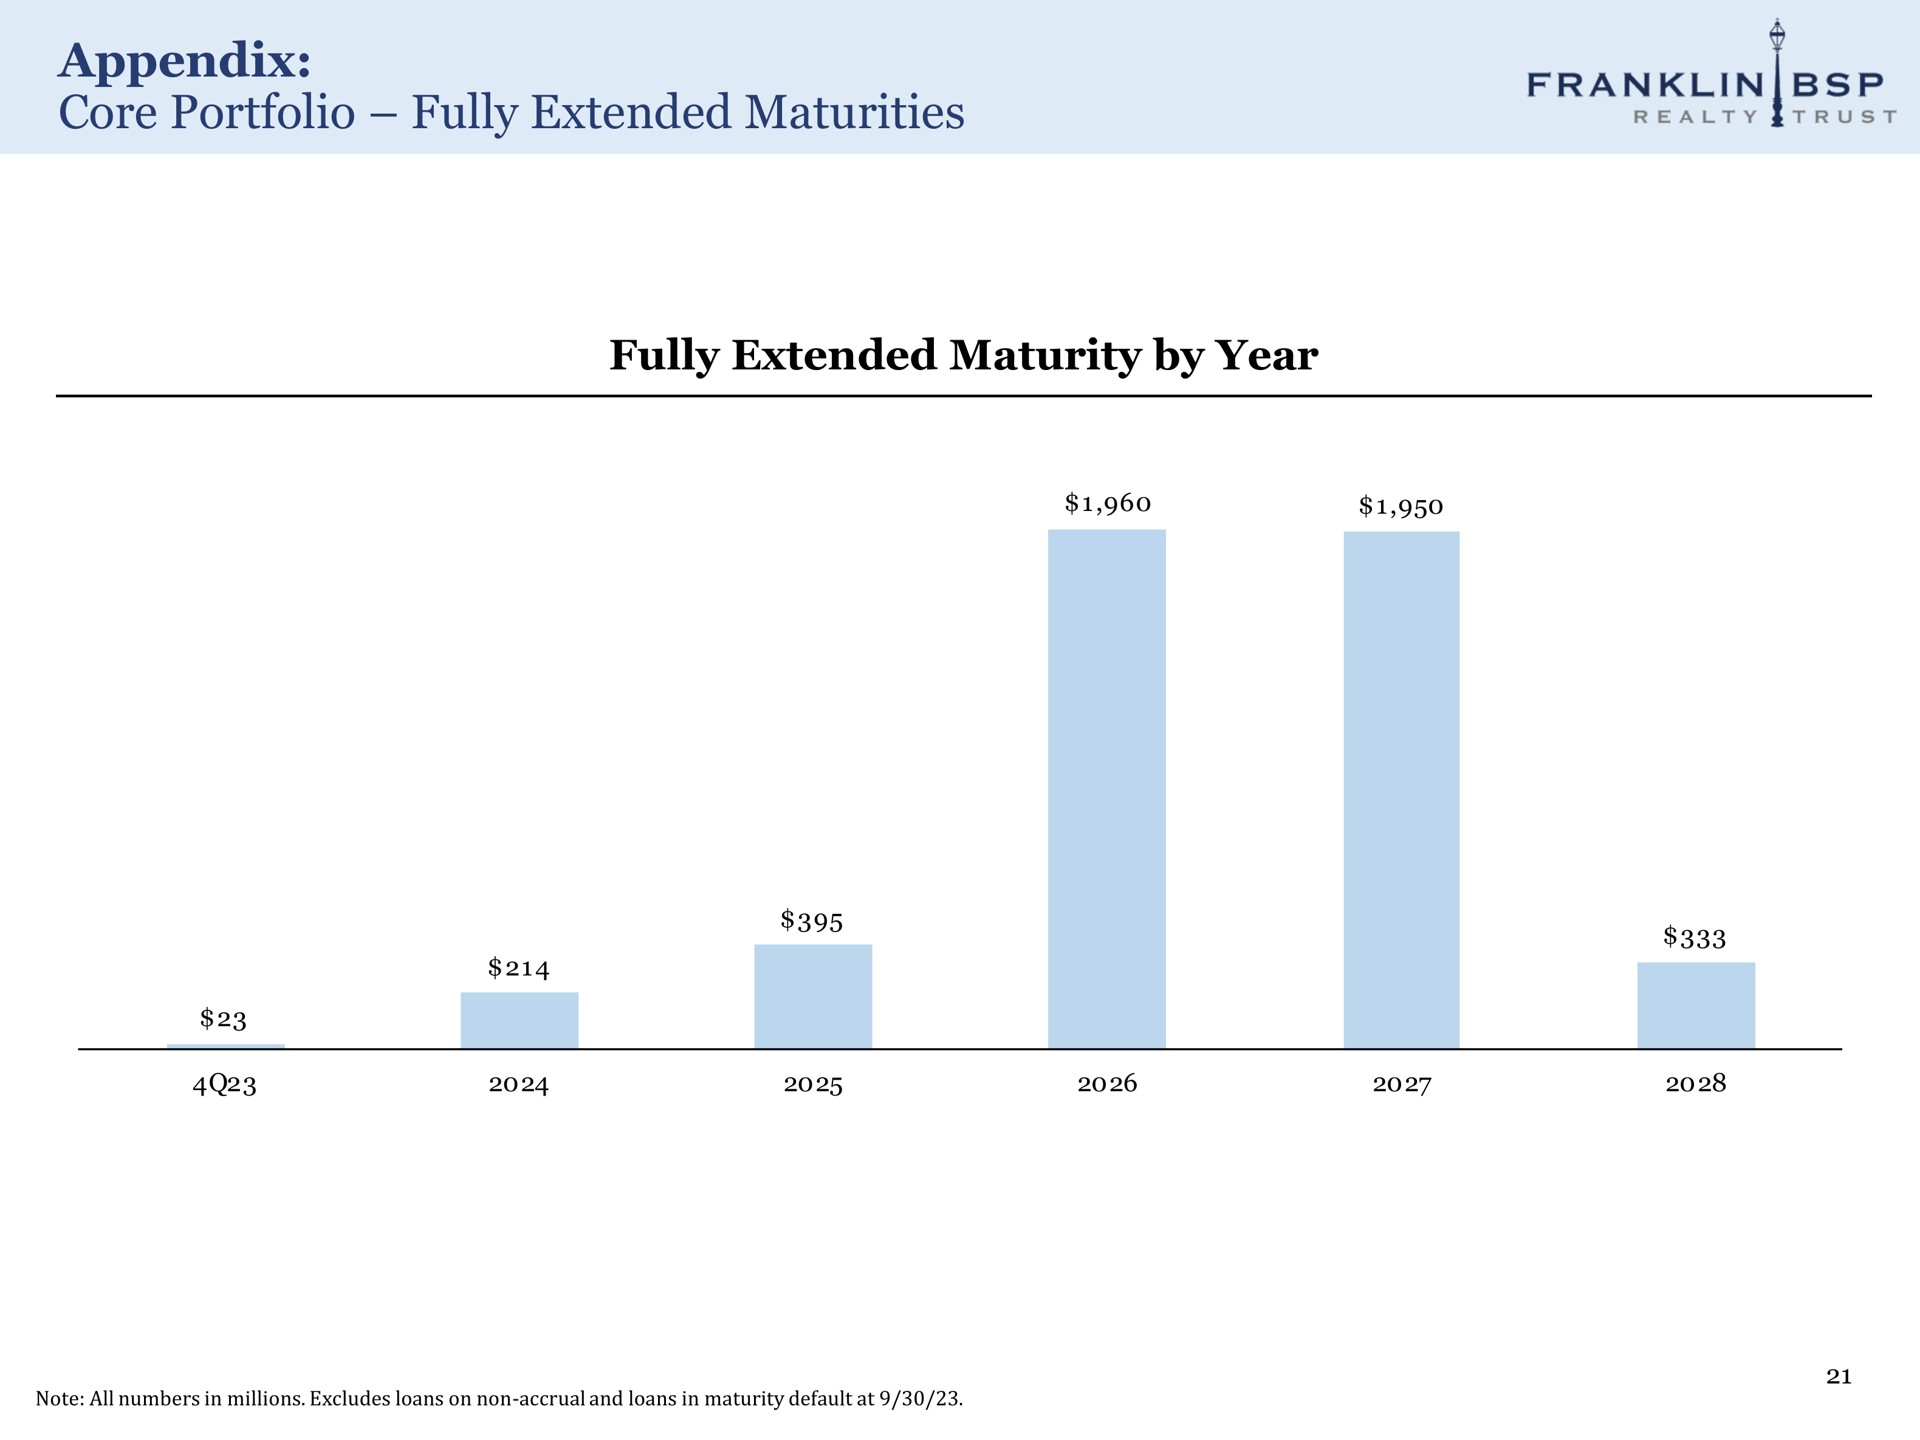 appendix core portfolio fully extended maturities fully extended maturity by year as franklin realty trust | Franklin BSP Realty Trust